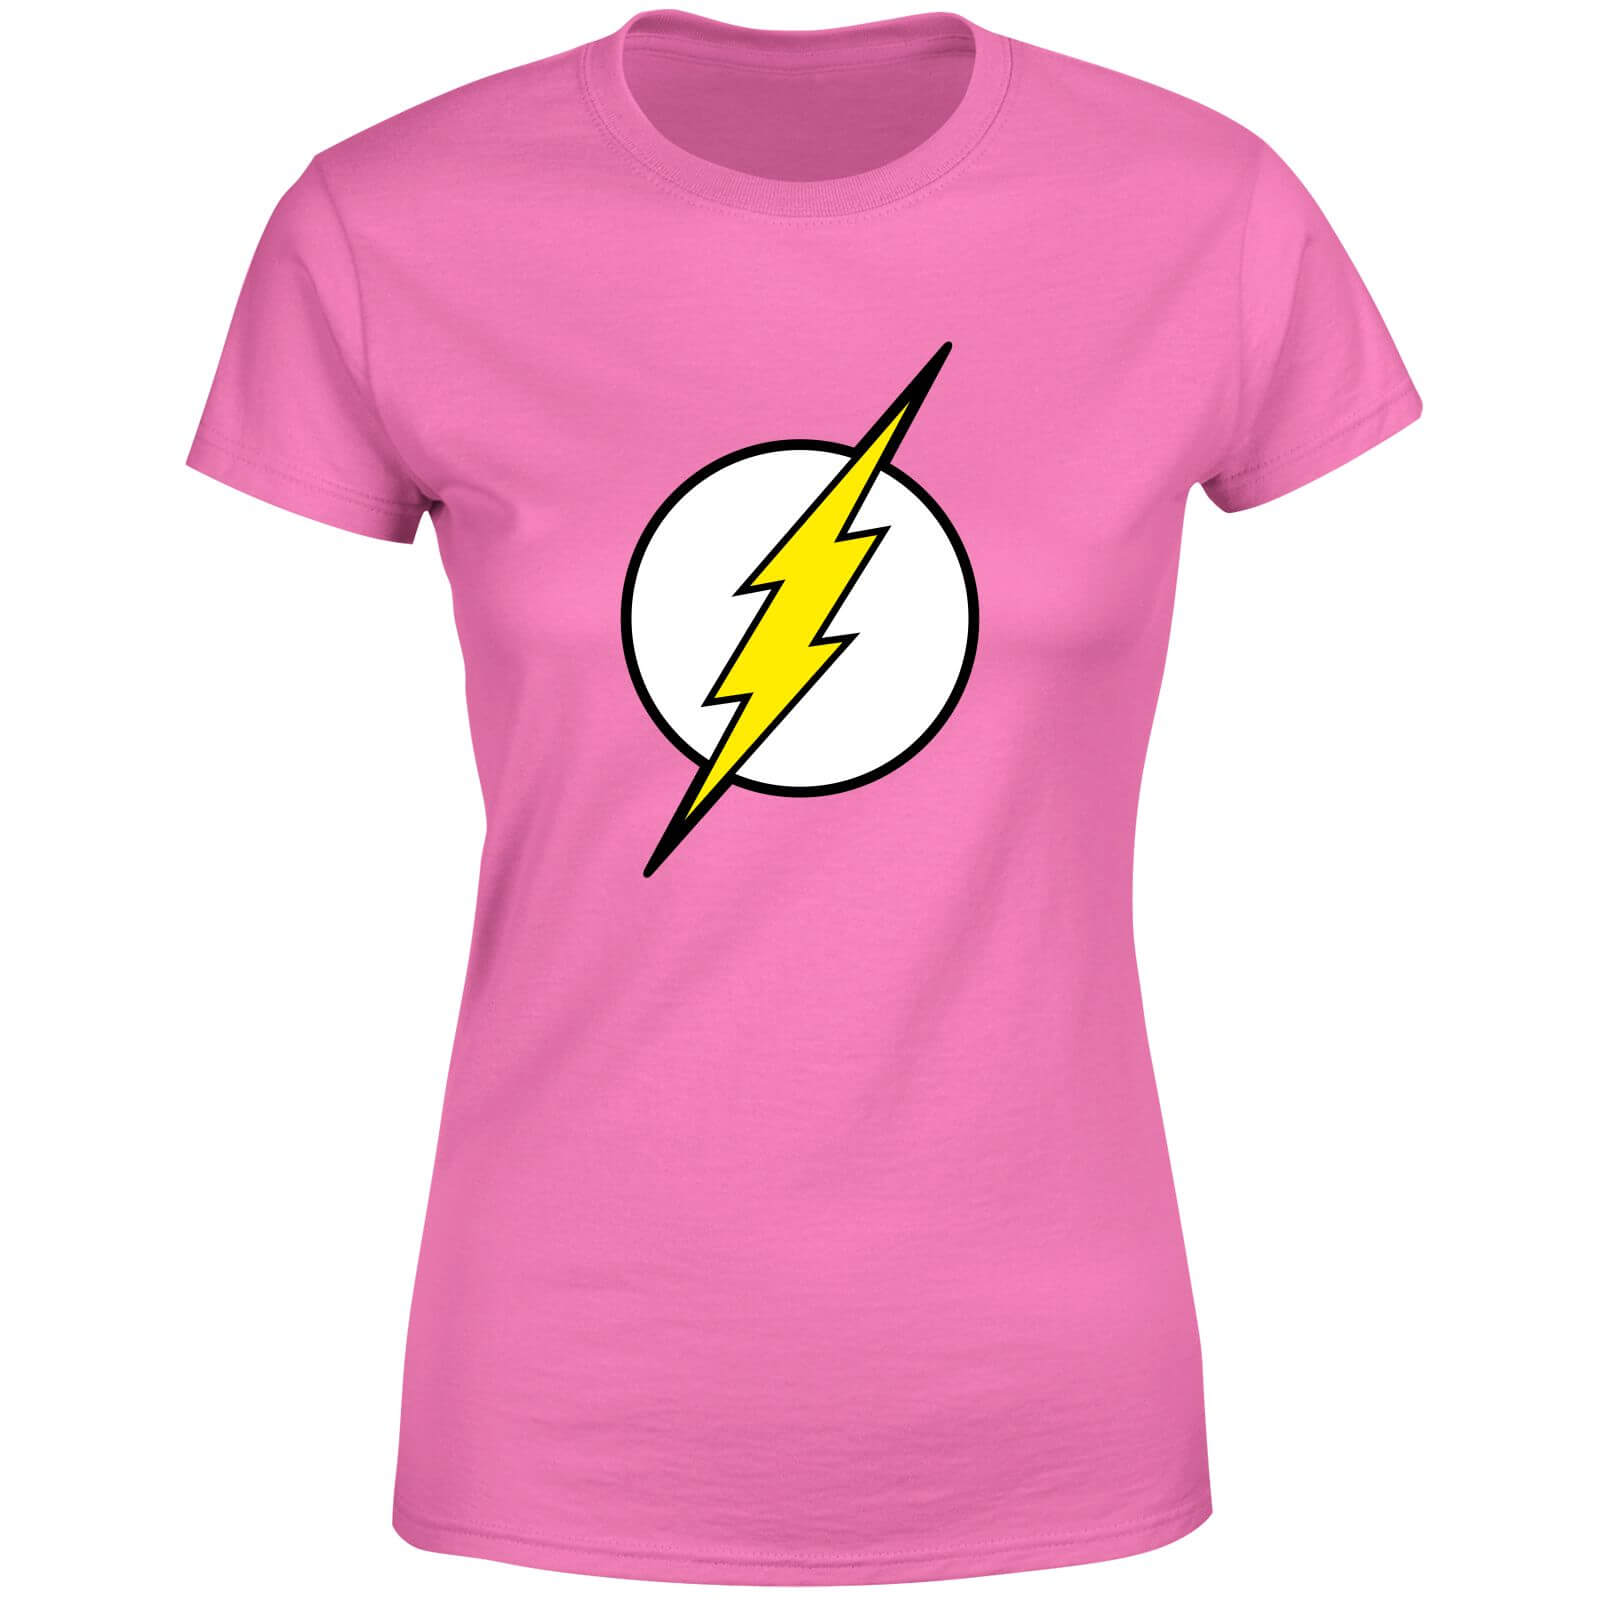 Justice League Flash Logo Women's T-Shirt - Pink - XXL - Rosa